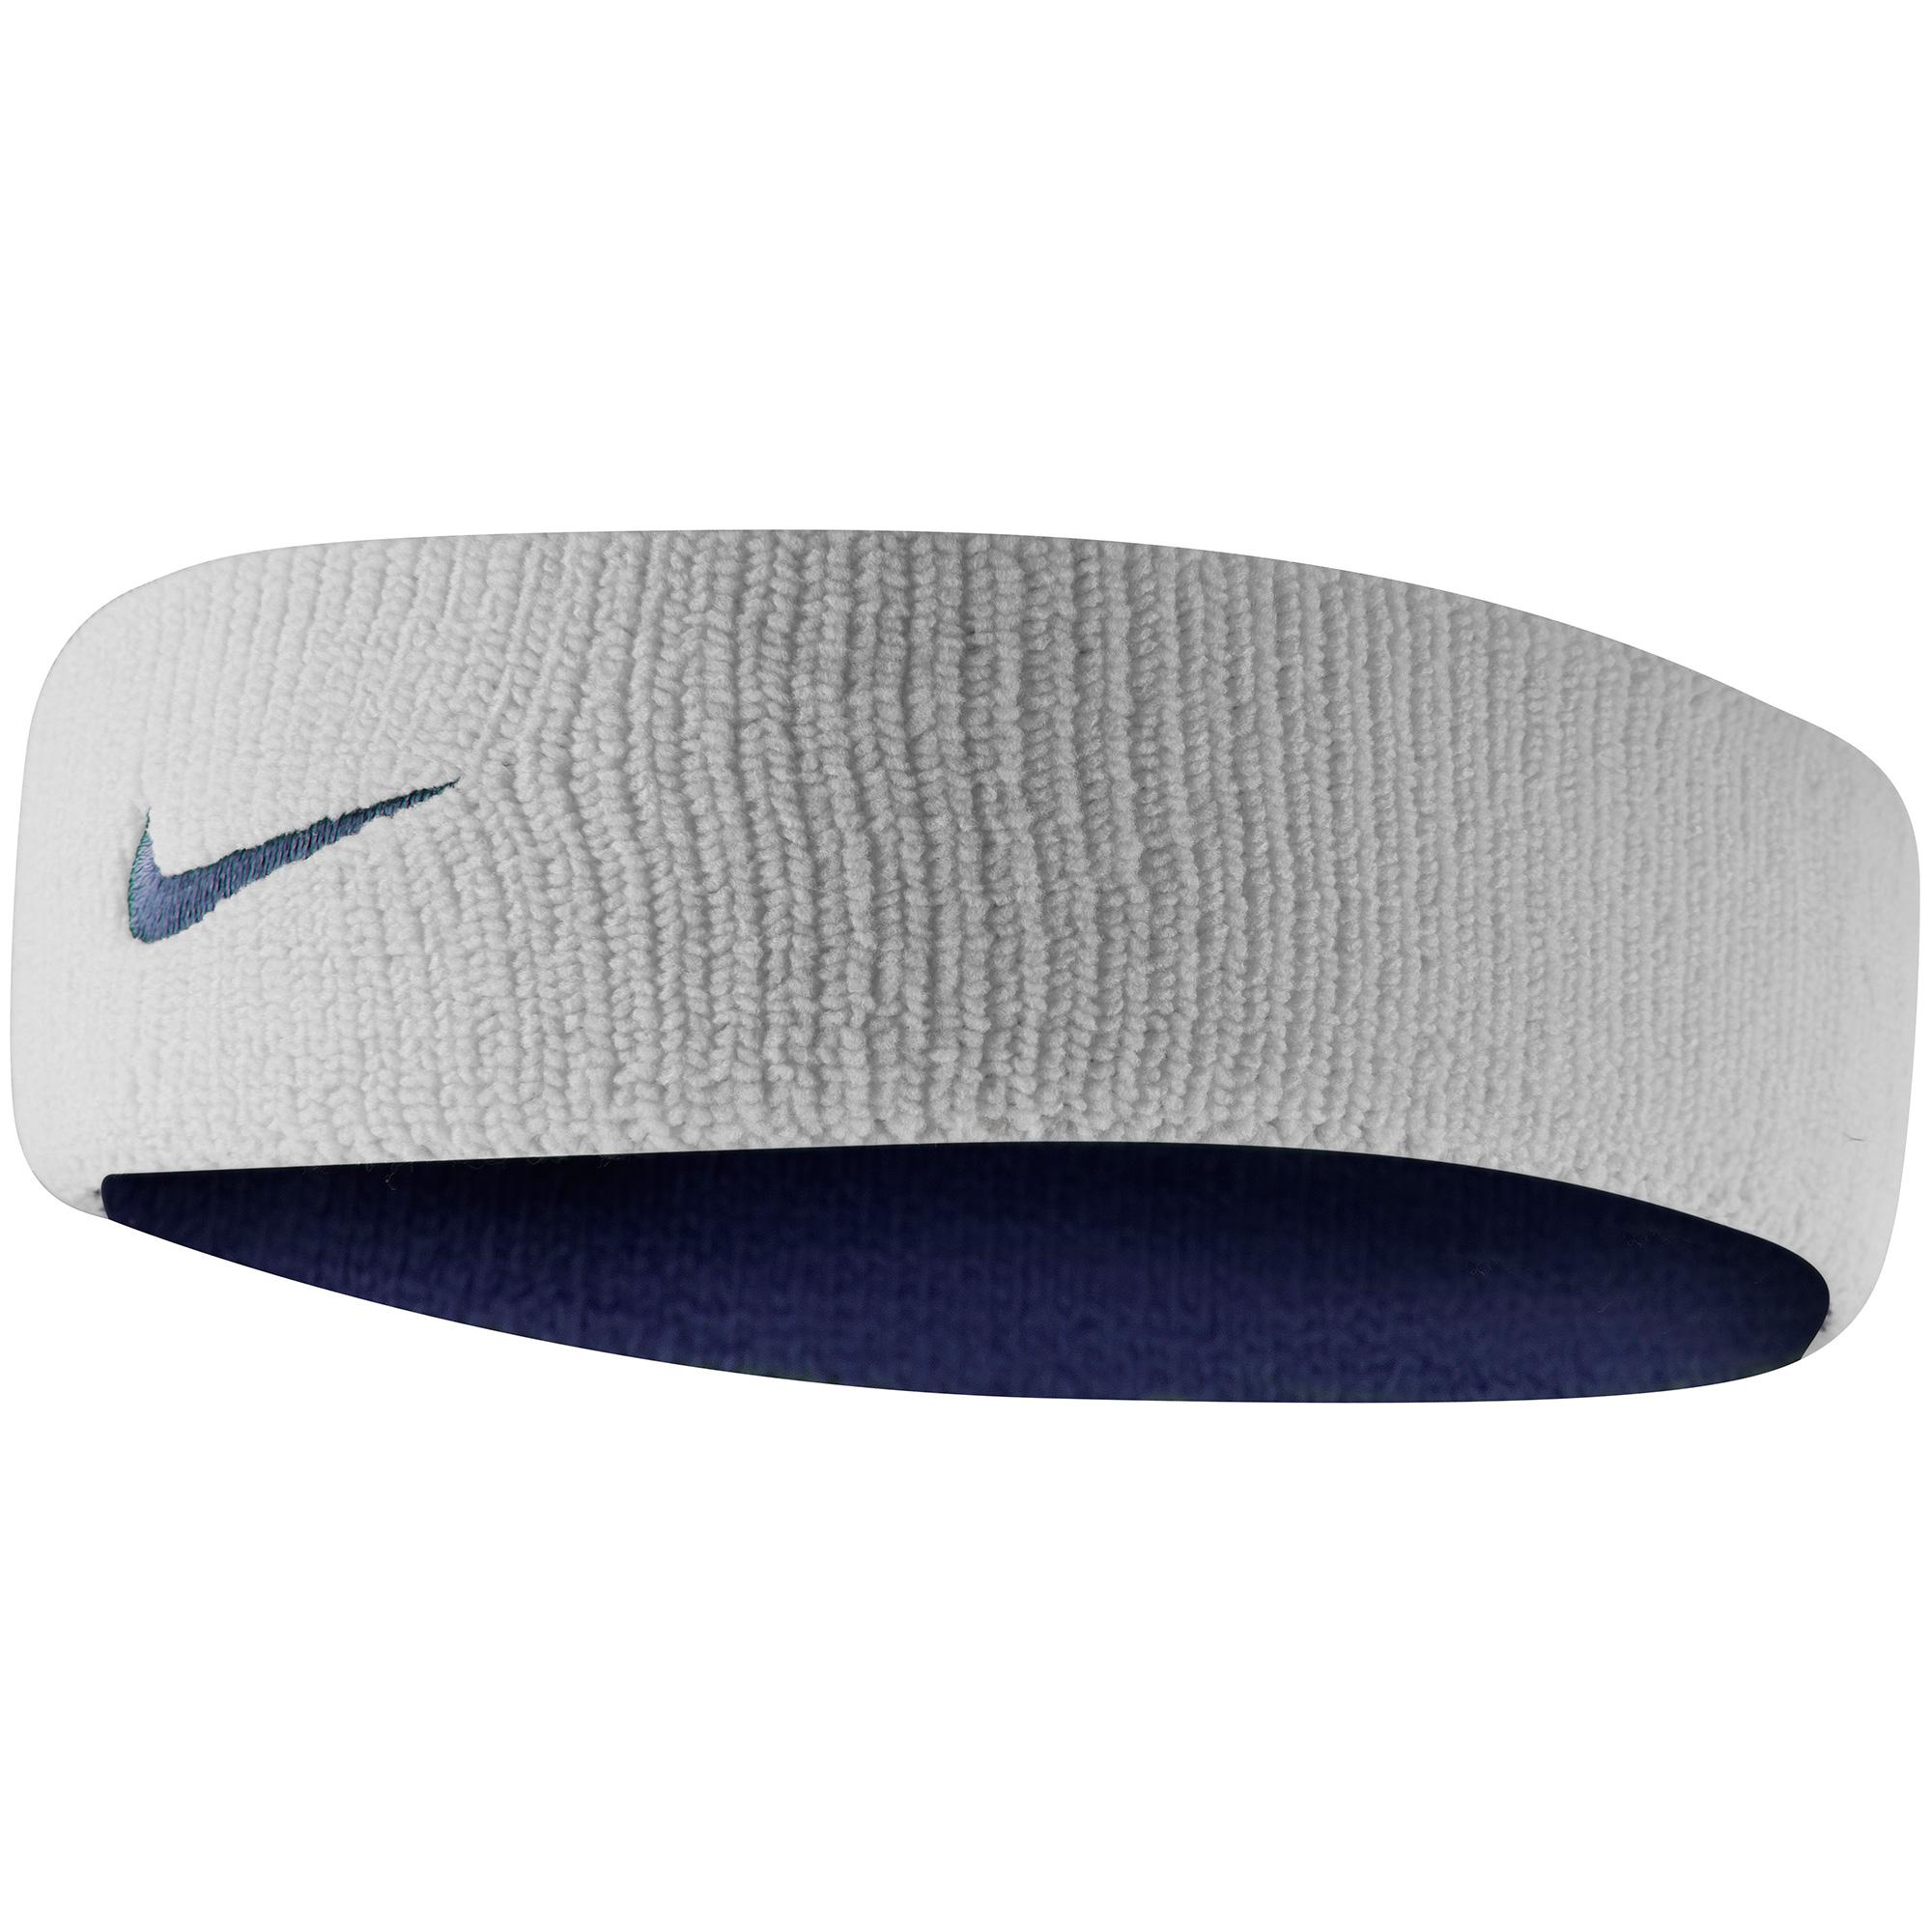 Резинка найк. Повязка Nike nnn071. Повязка Nike, артикул nnn076. Шапка Nike Dri Fit. Повязка adidas Tennis Headband.